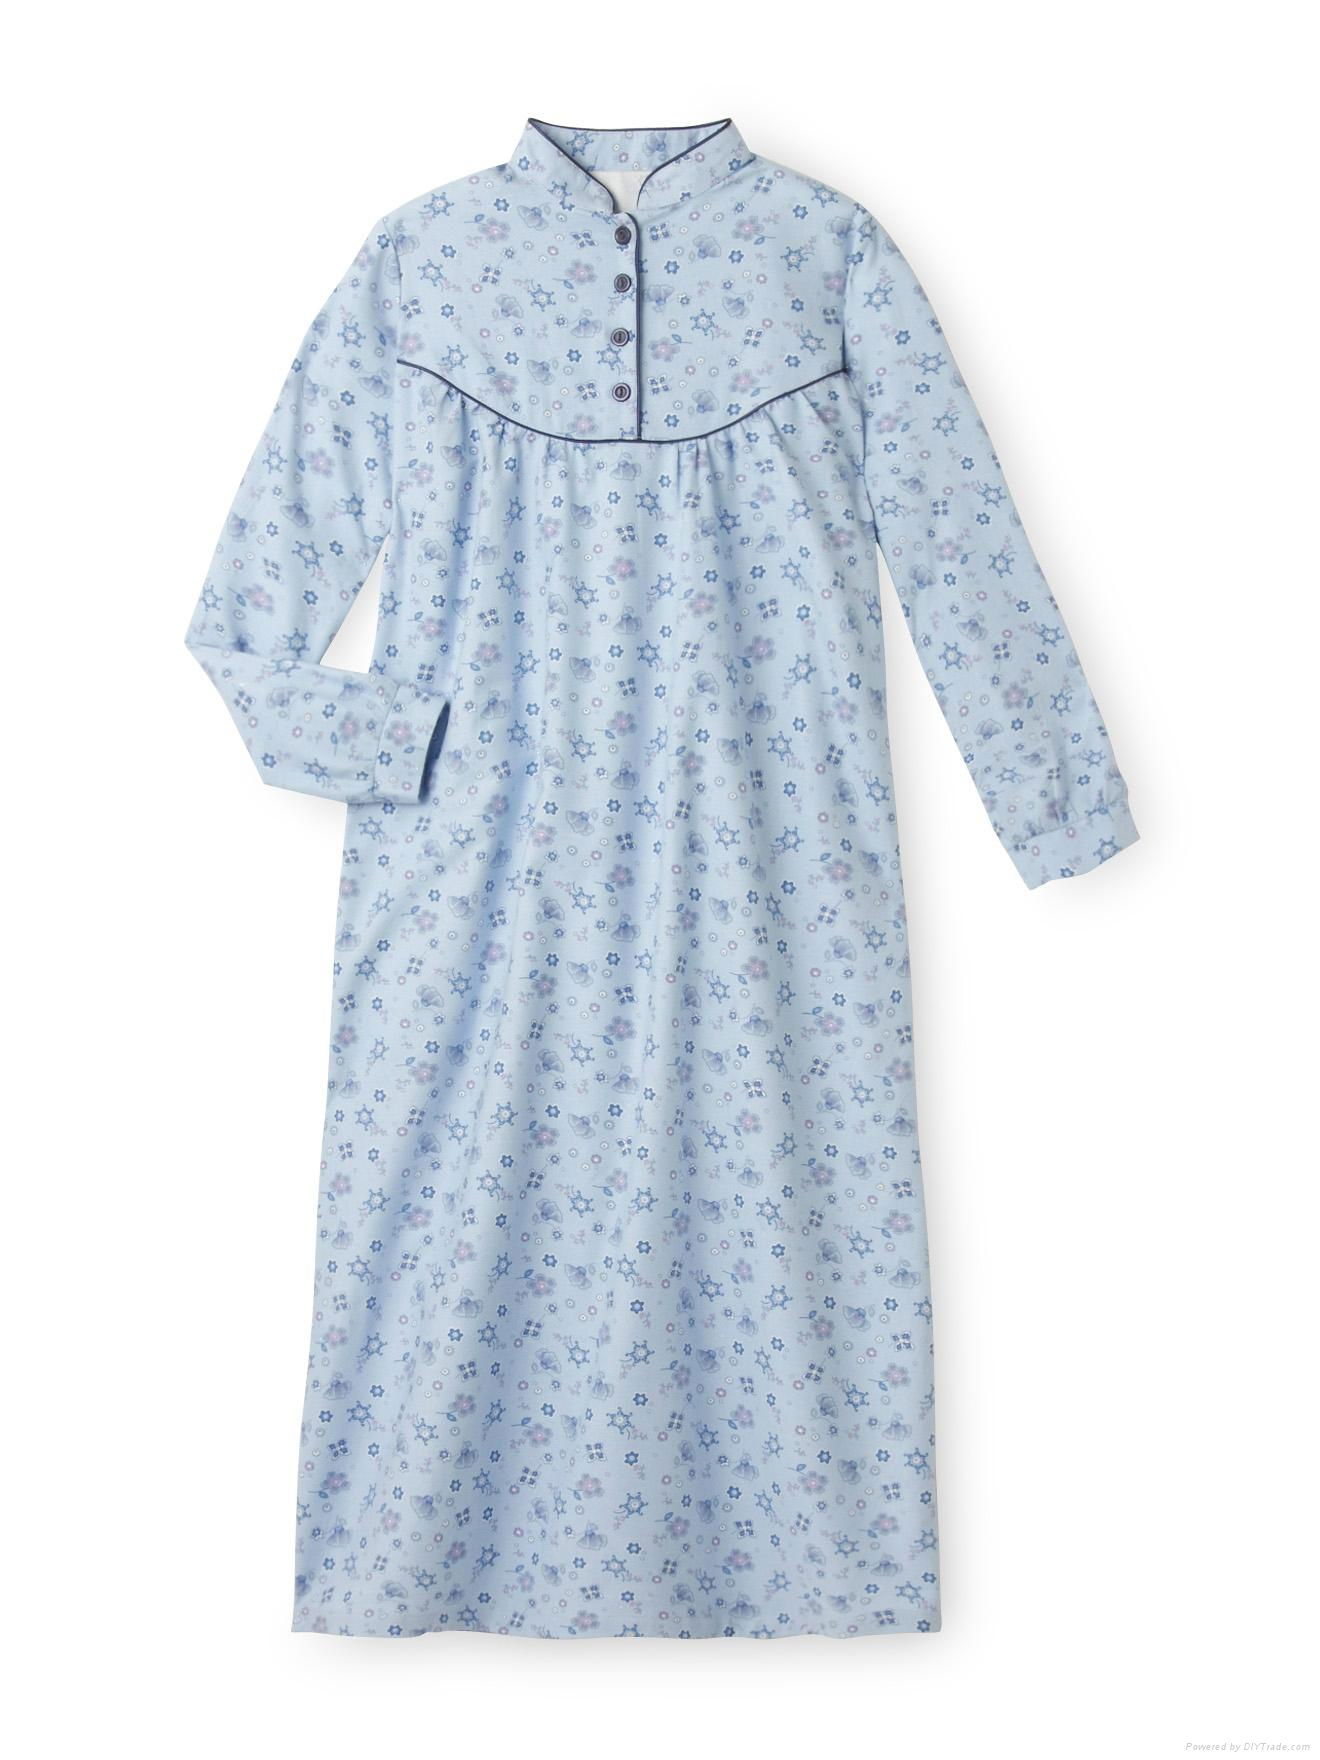 ladies nightgown 2